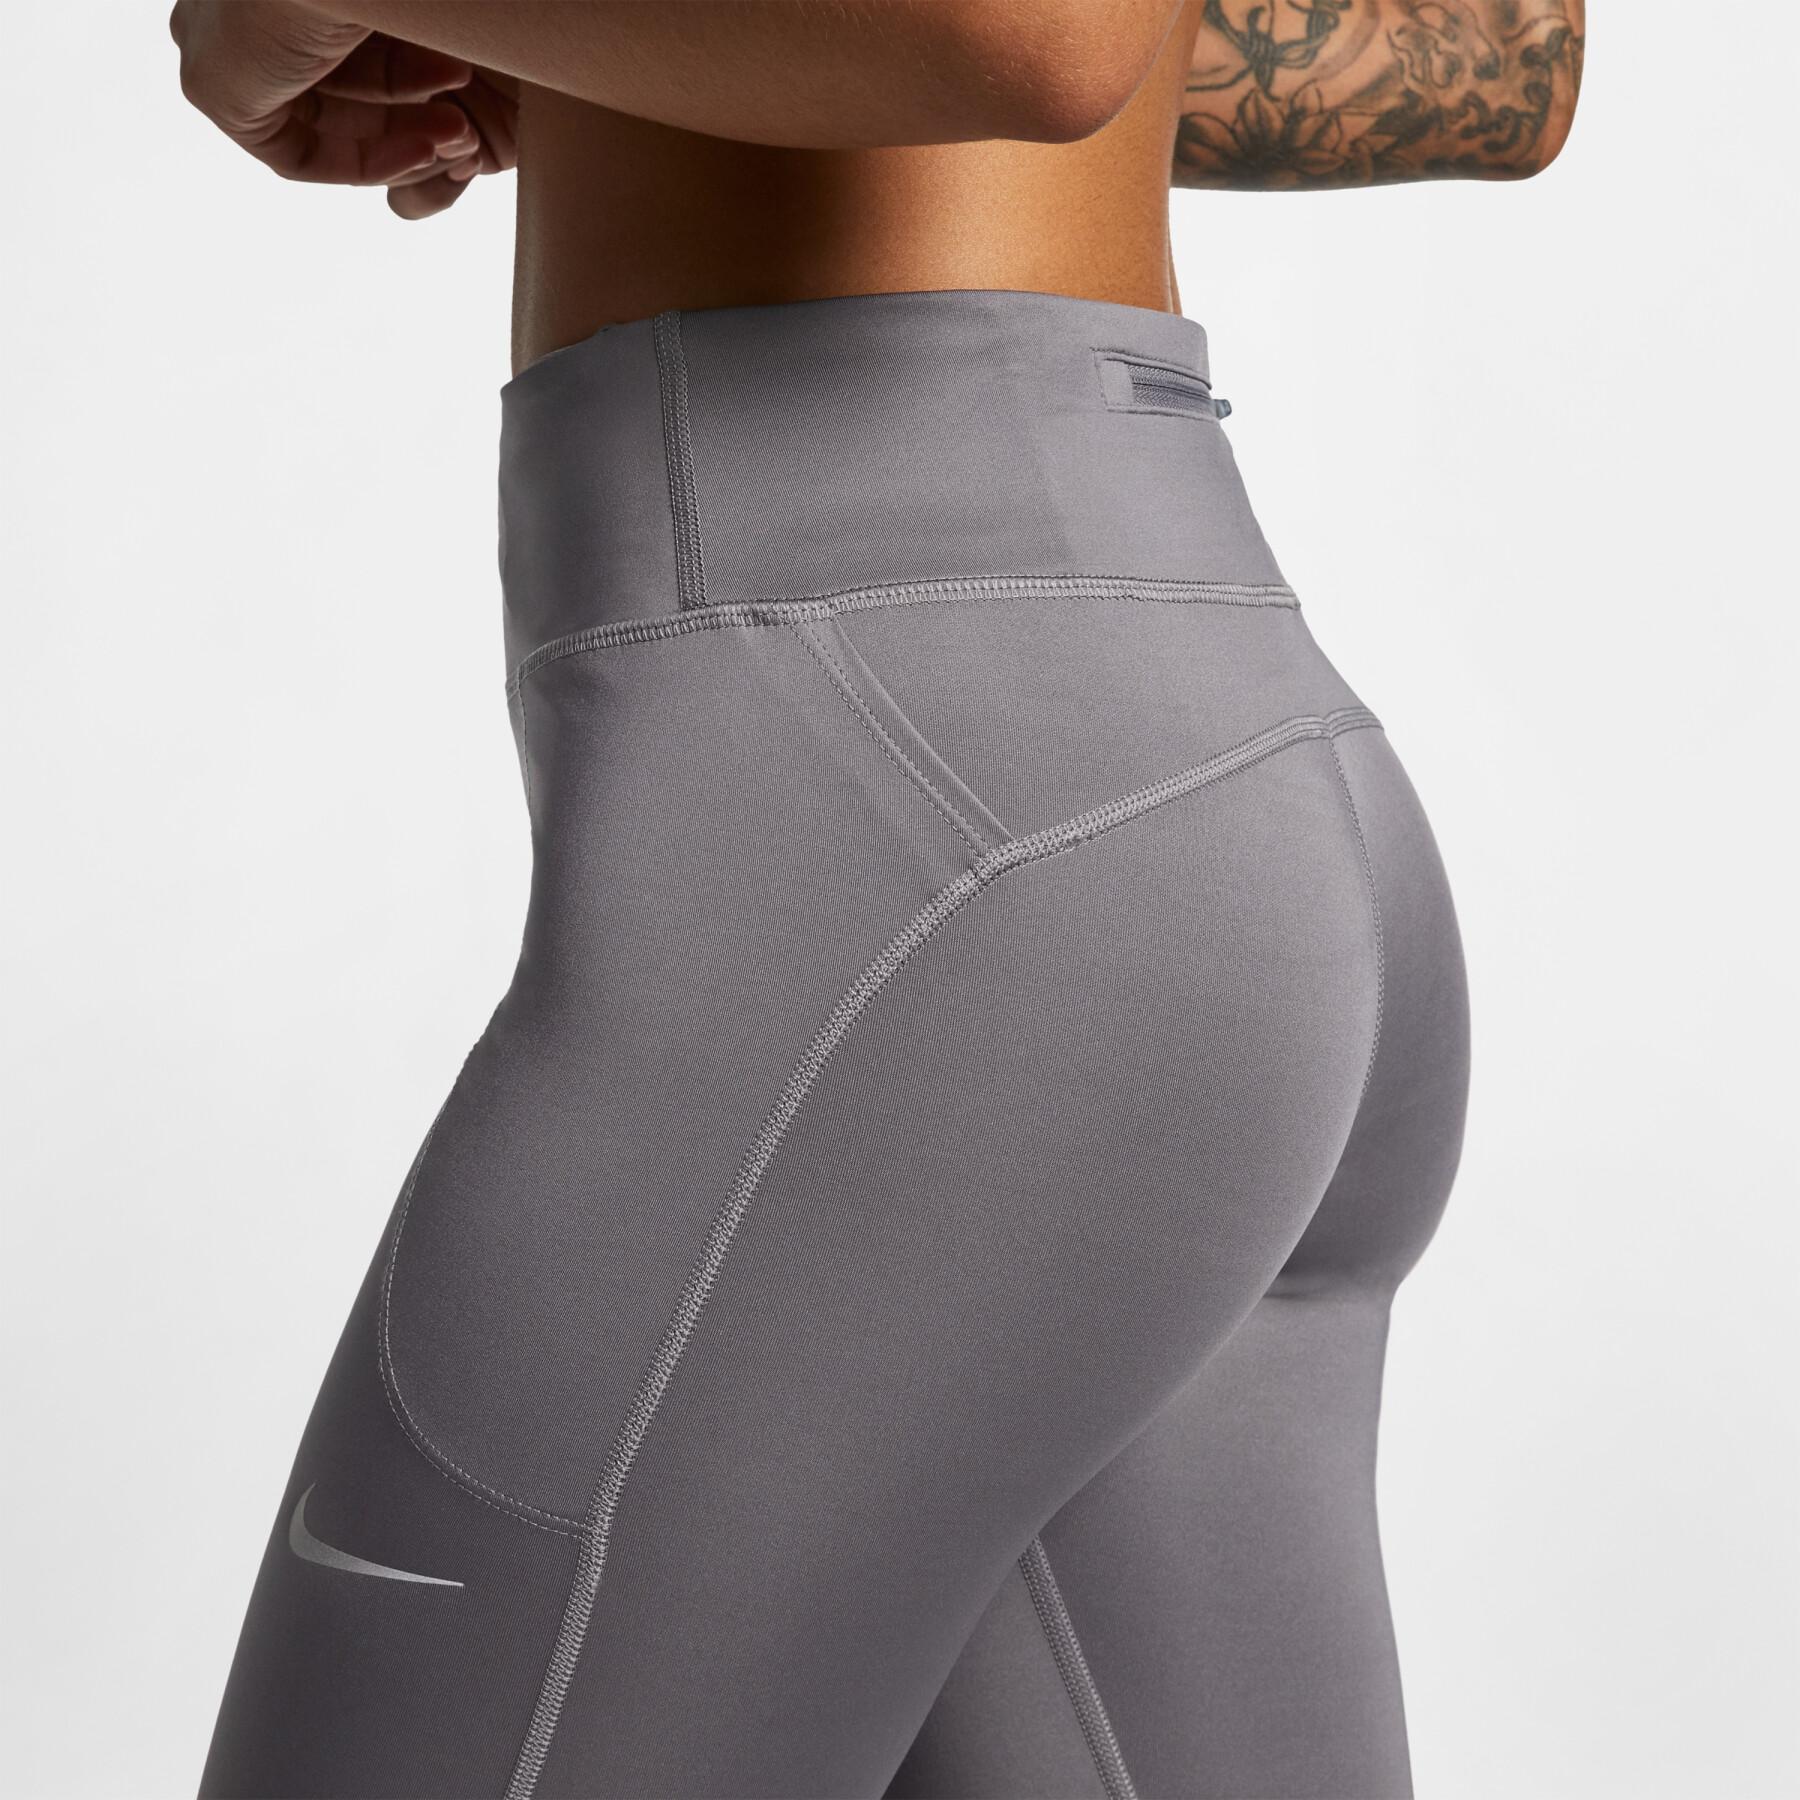 Women's leggings Nike Fast